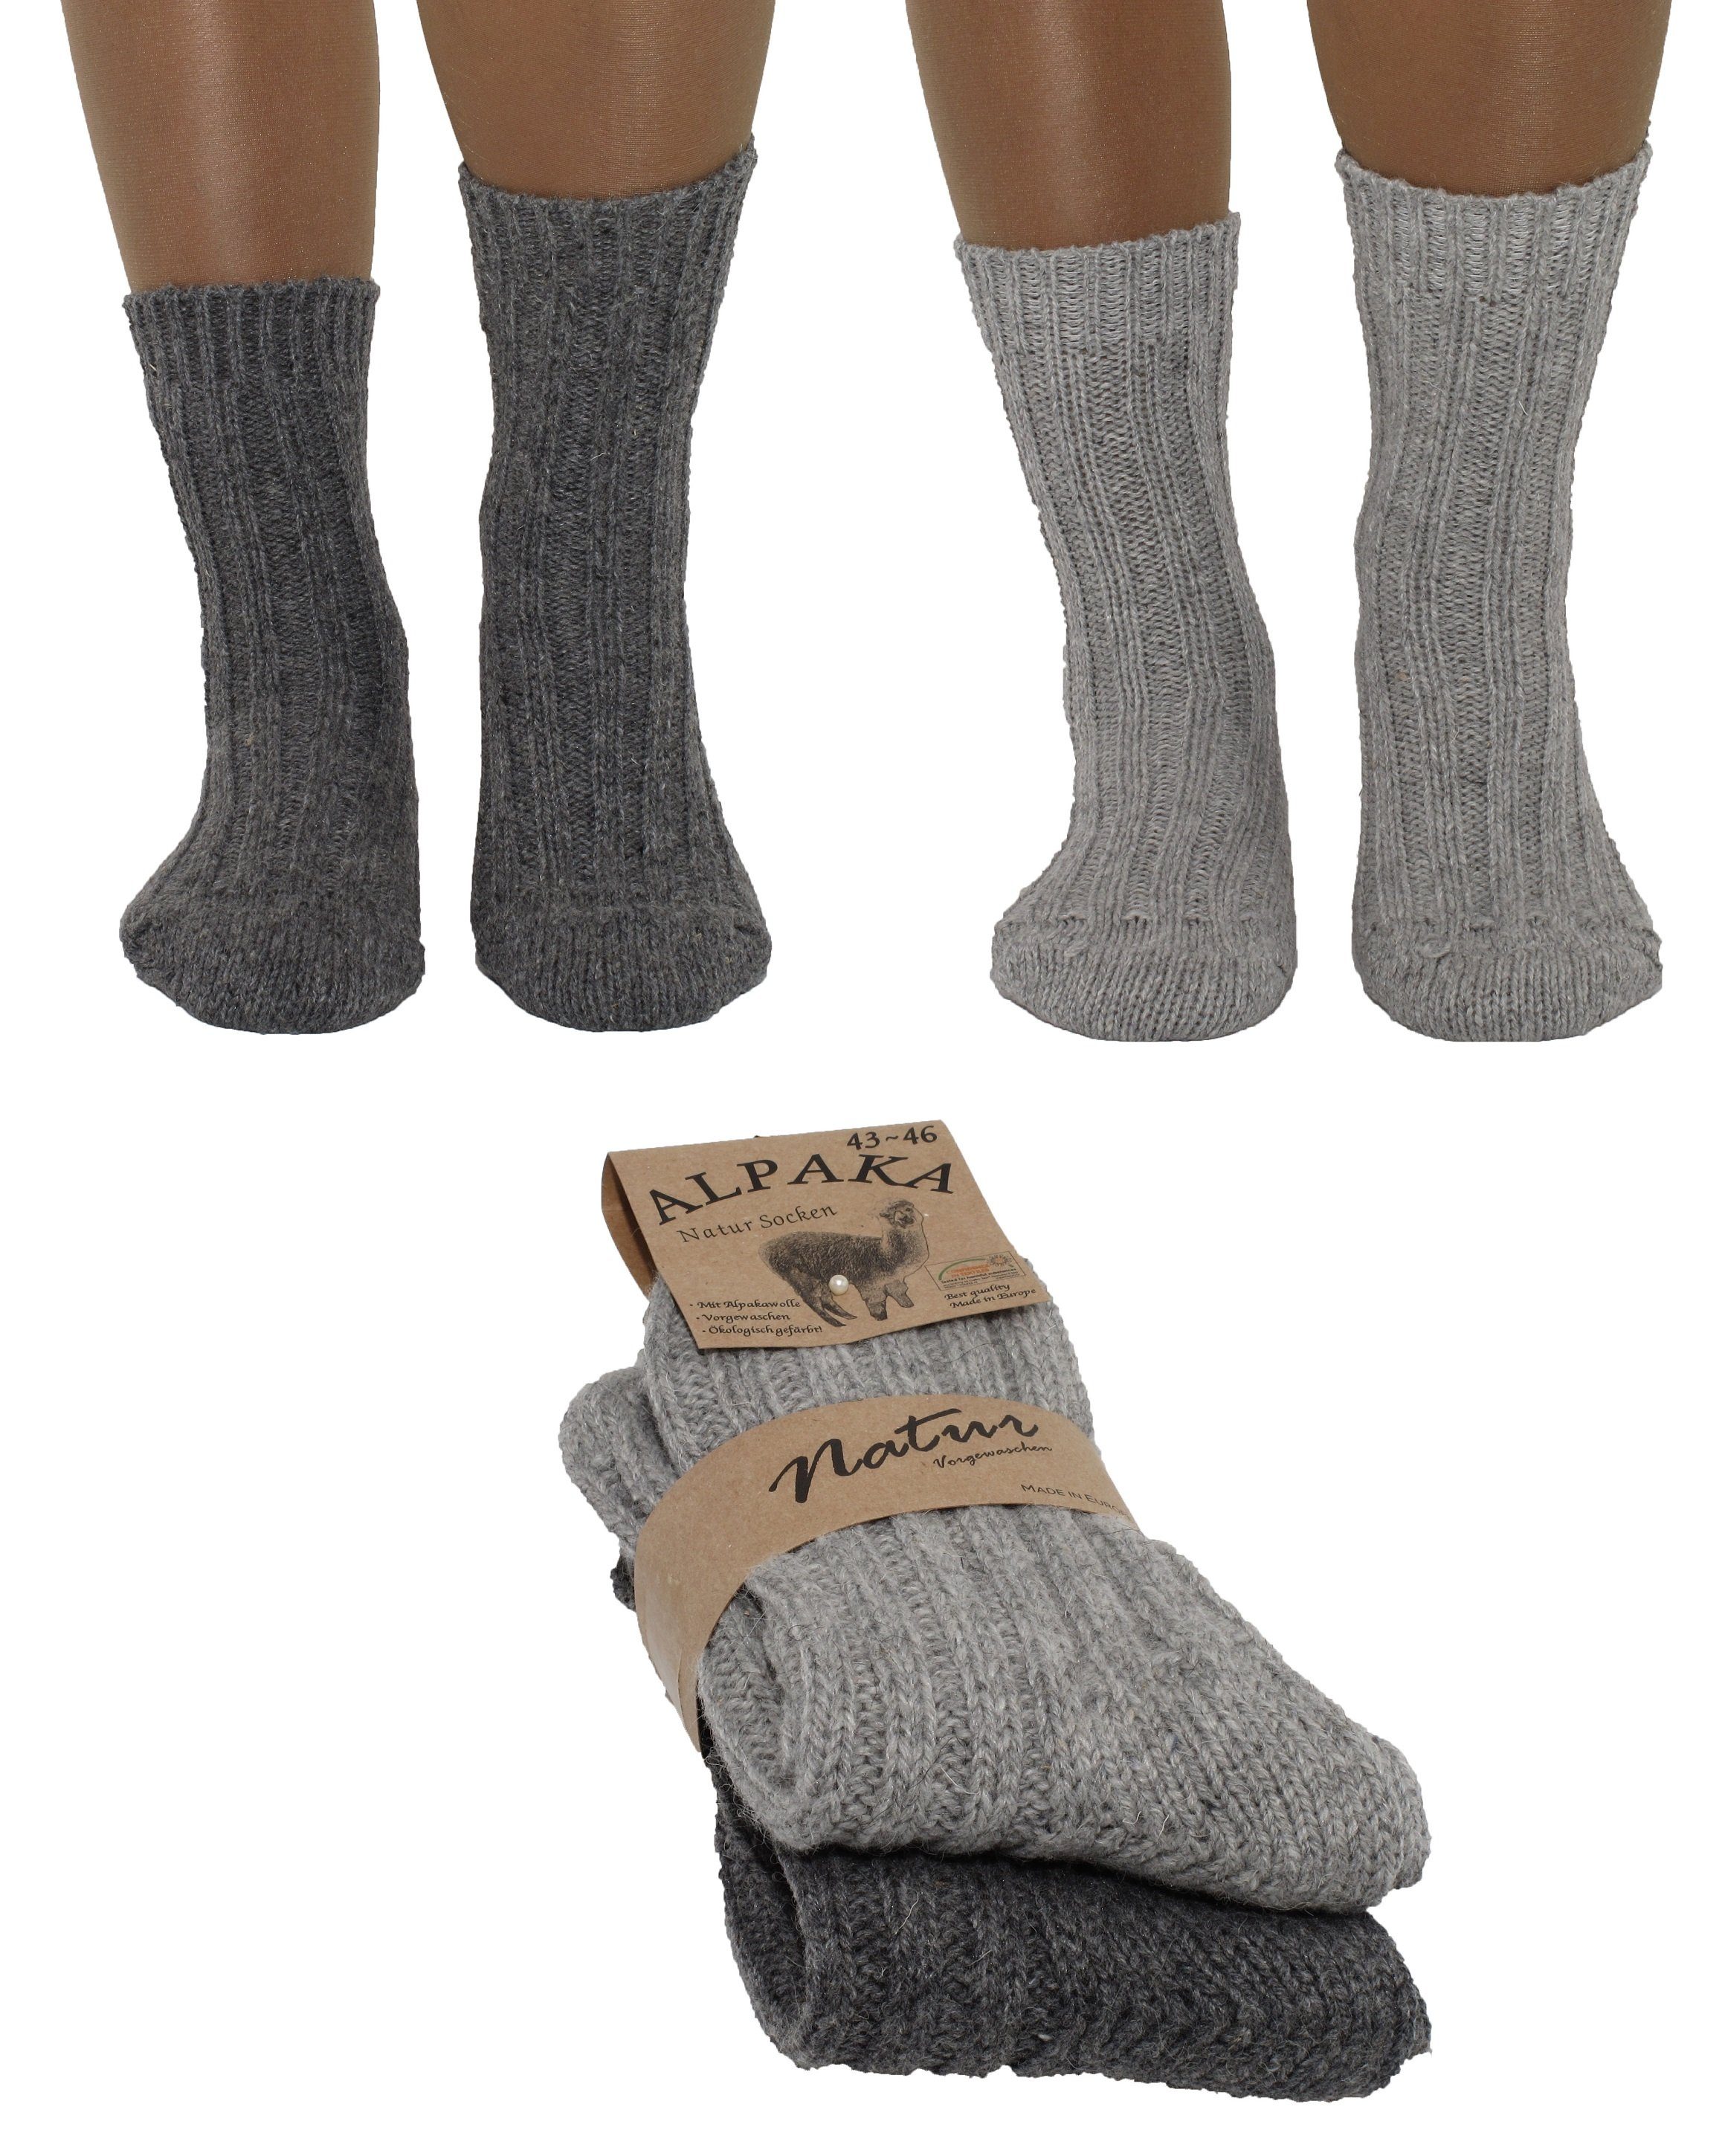 Markenwarenshop-Style Socken 2 Paar Alpaka Winter Socken Schafswolle Wollsocken gestrickt Strümpfe